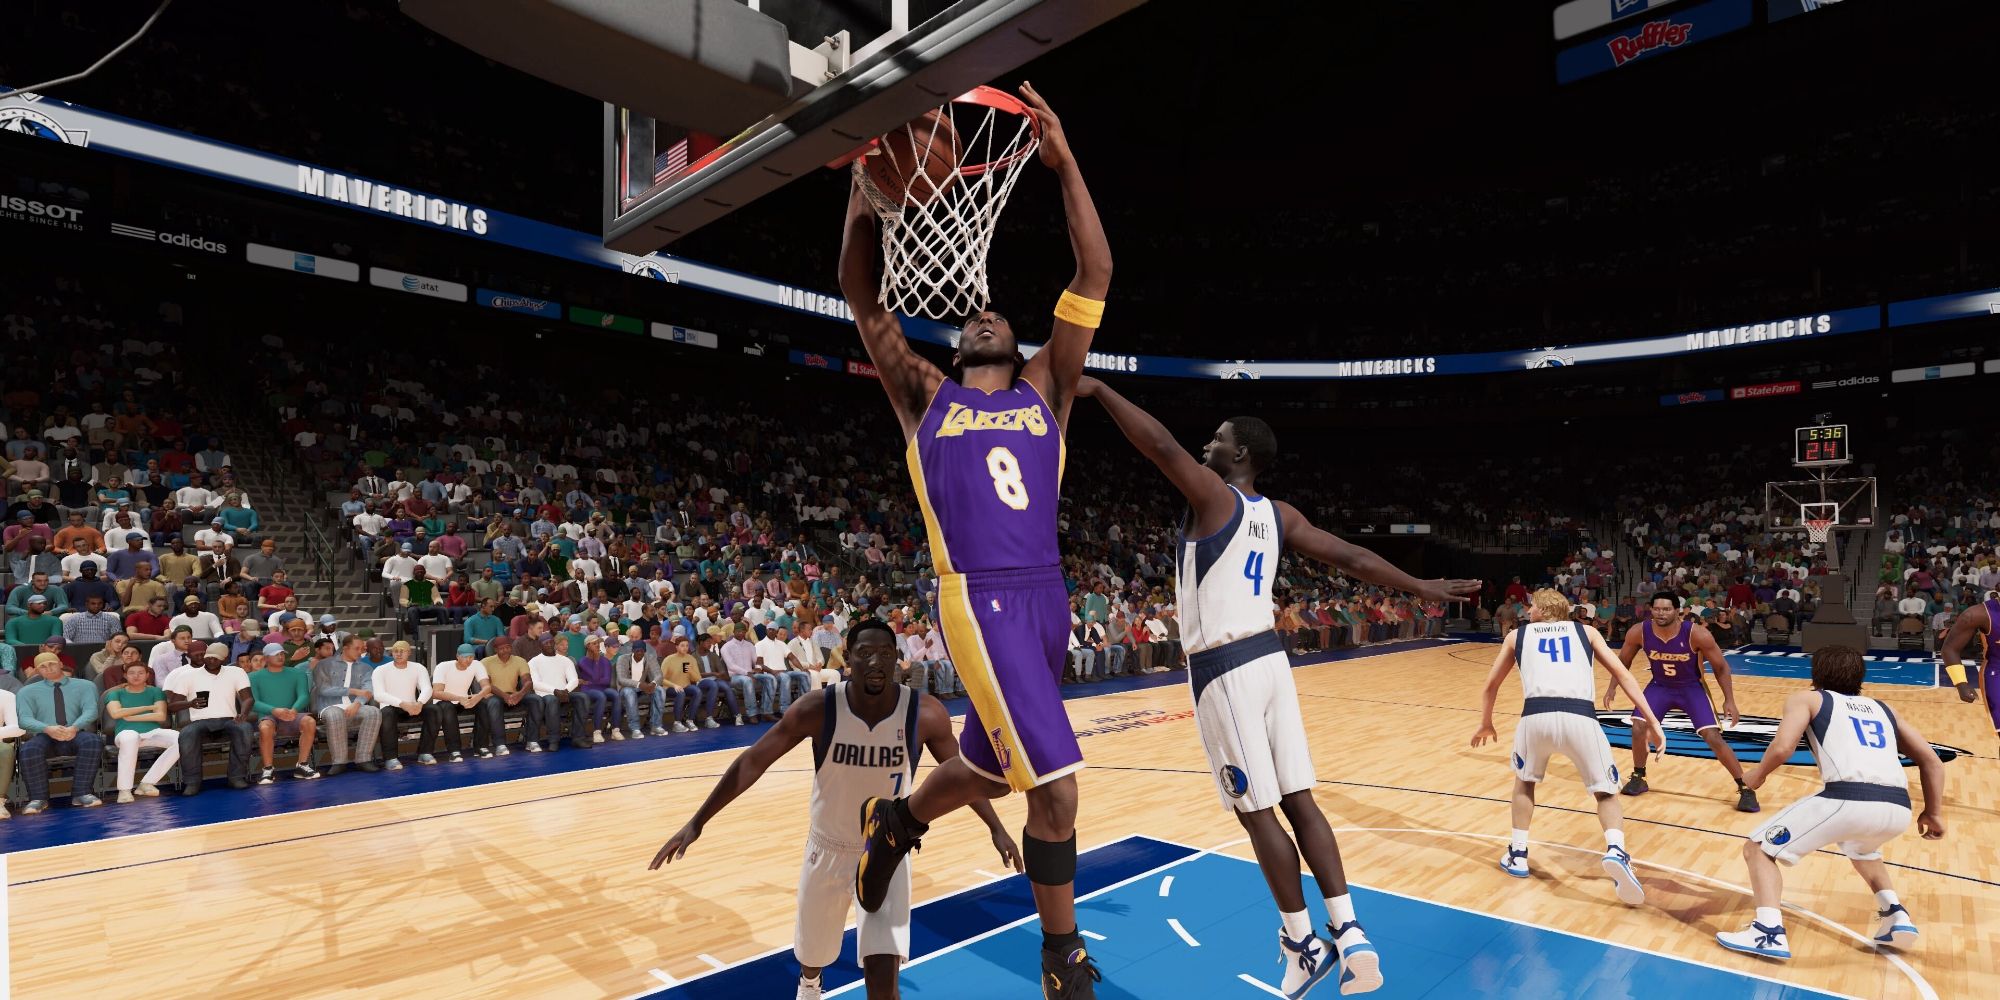 Kobe Bryant dunking in a game against the Dallas Mavericks in NBA 2K23